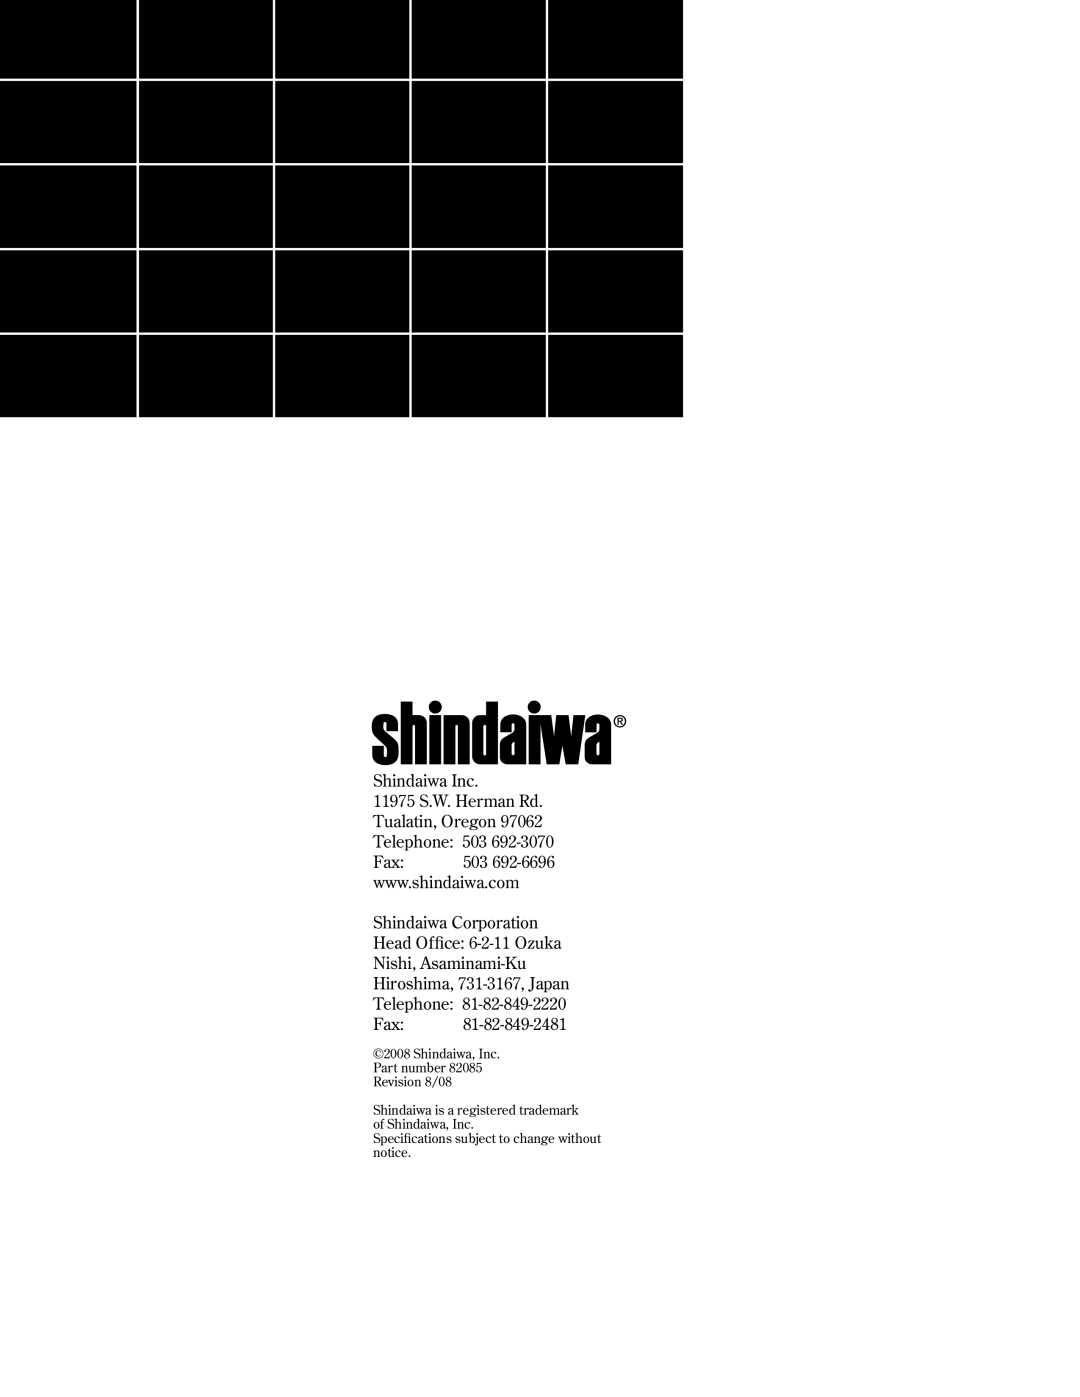 Shindaiwa 82085, 326T manual Shindaiwa Inc, Shindaiwa Corporation Head Office: 6-2-11Ozuka, Telephone Fax 